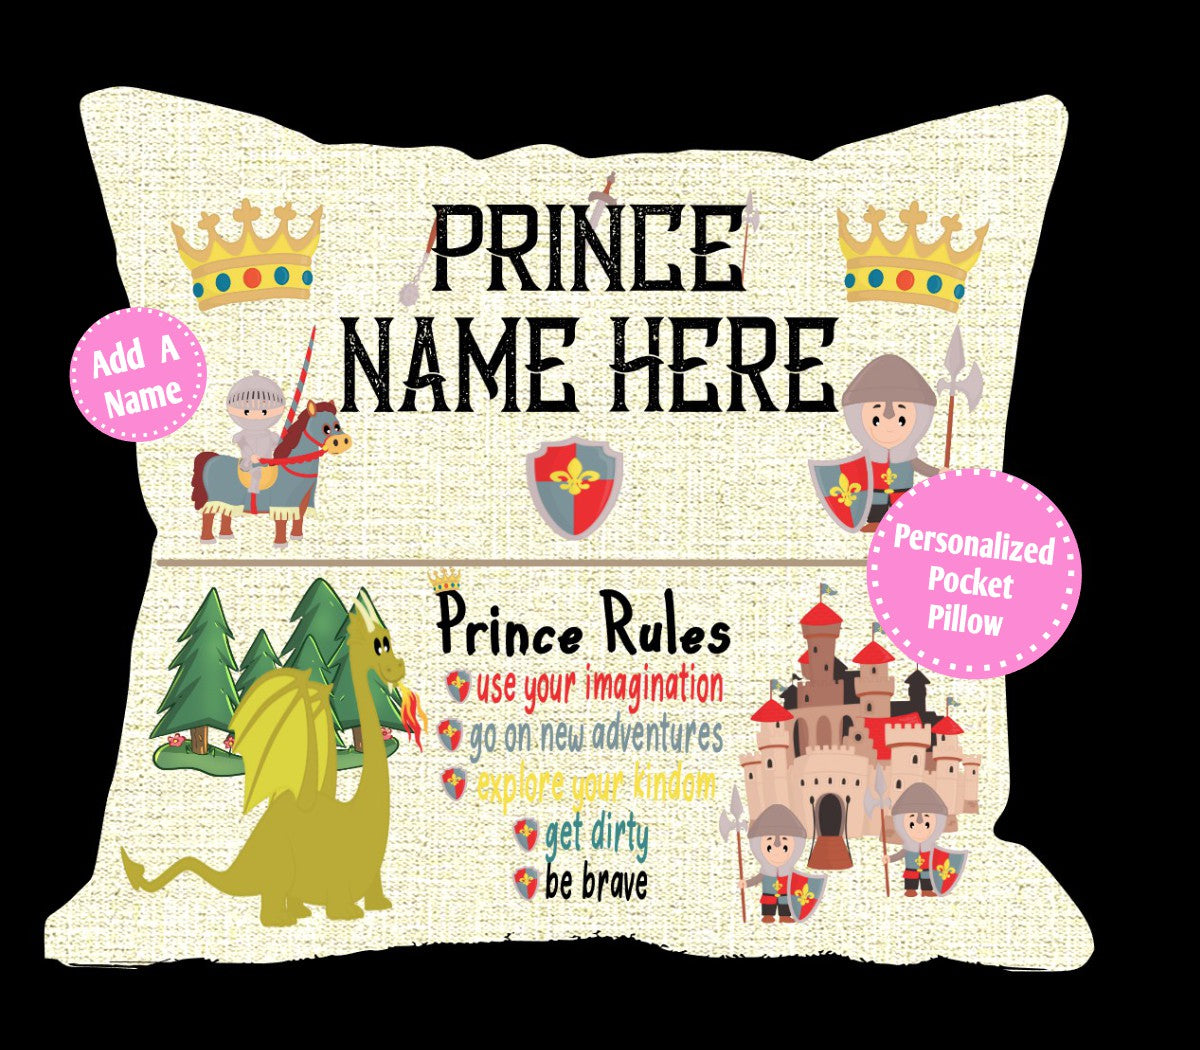 Prince Rules Pocket Pillow Digital Designs